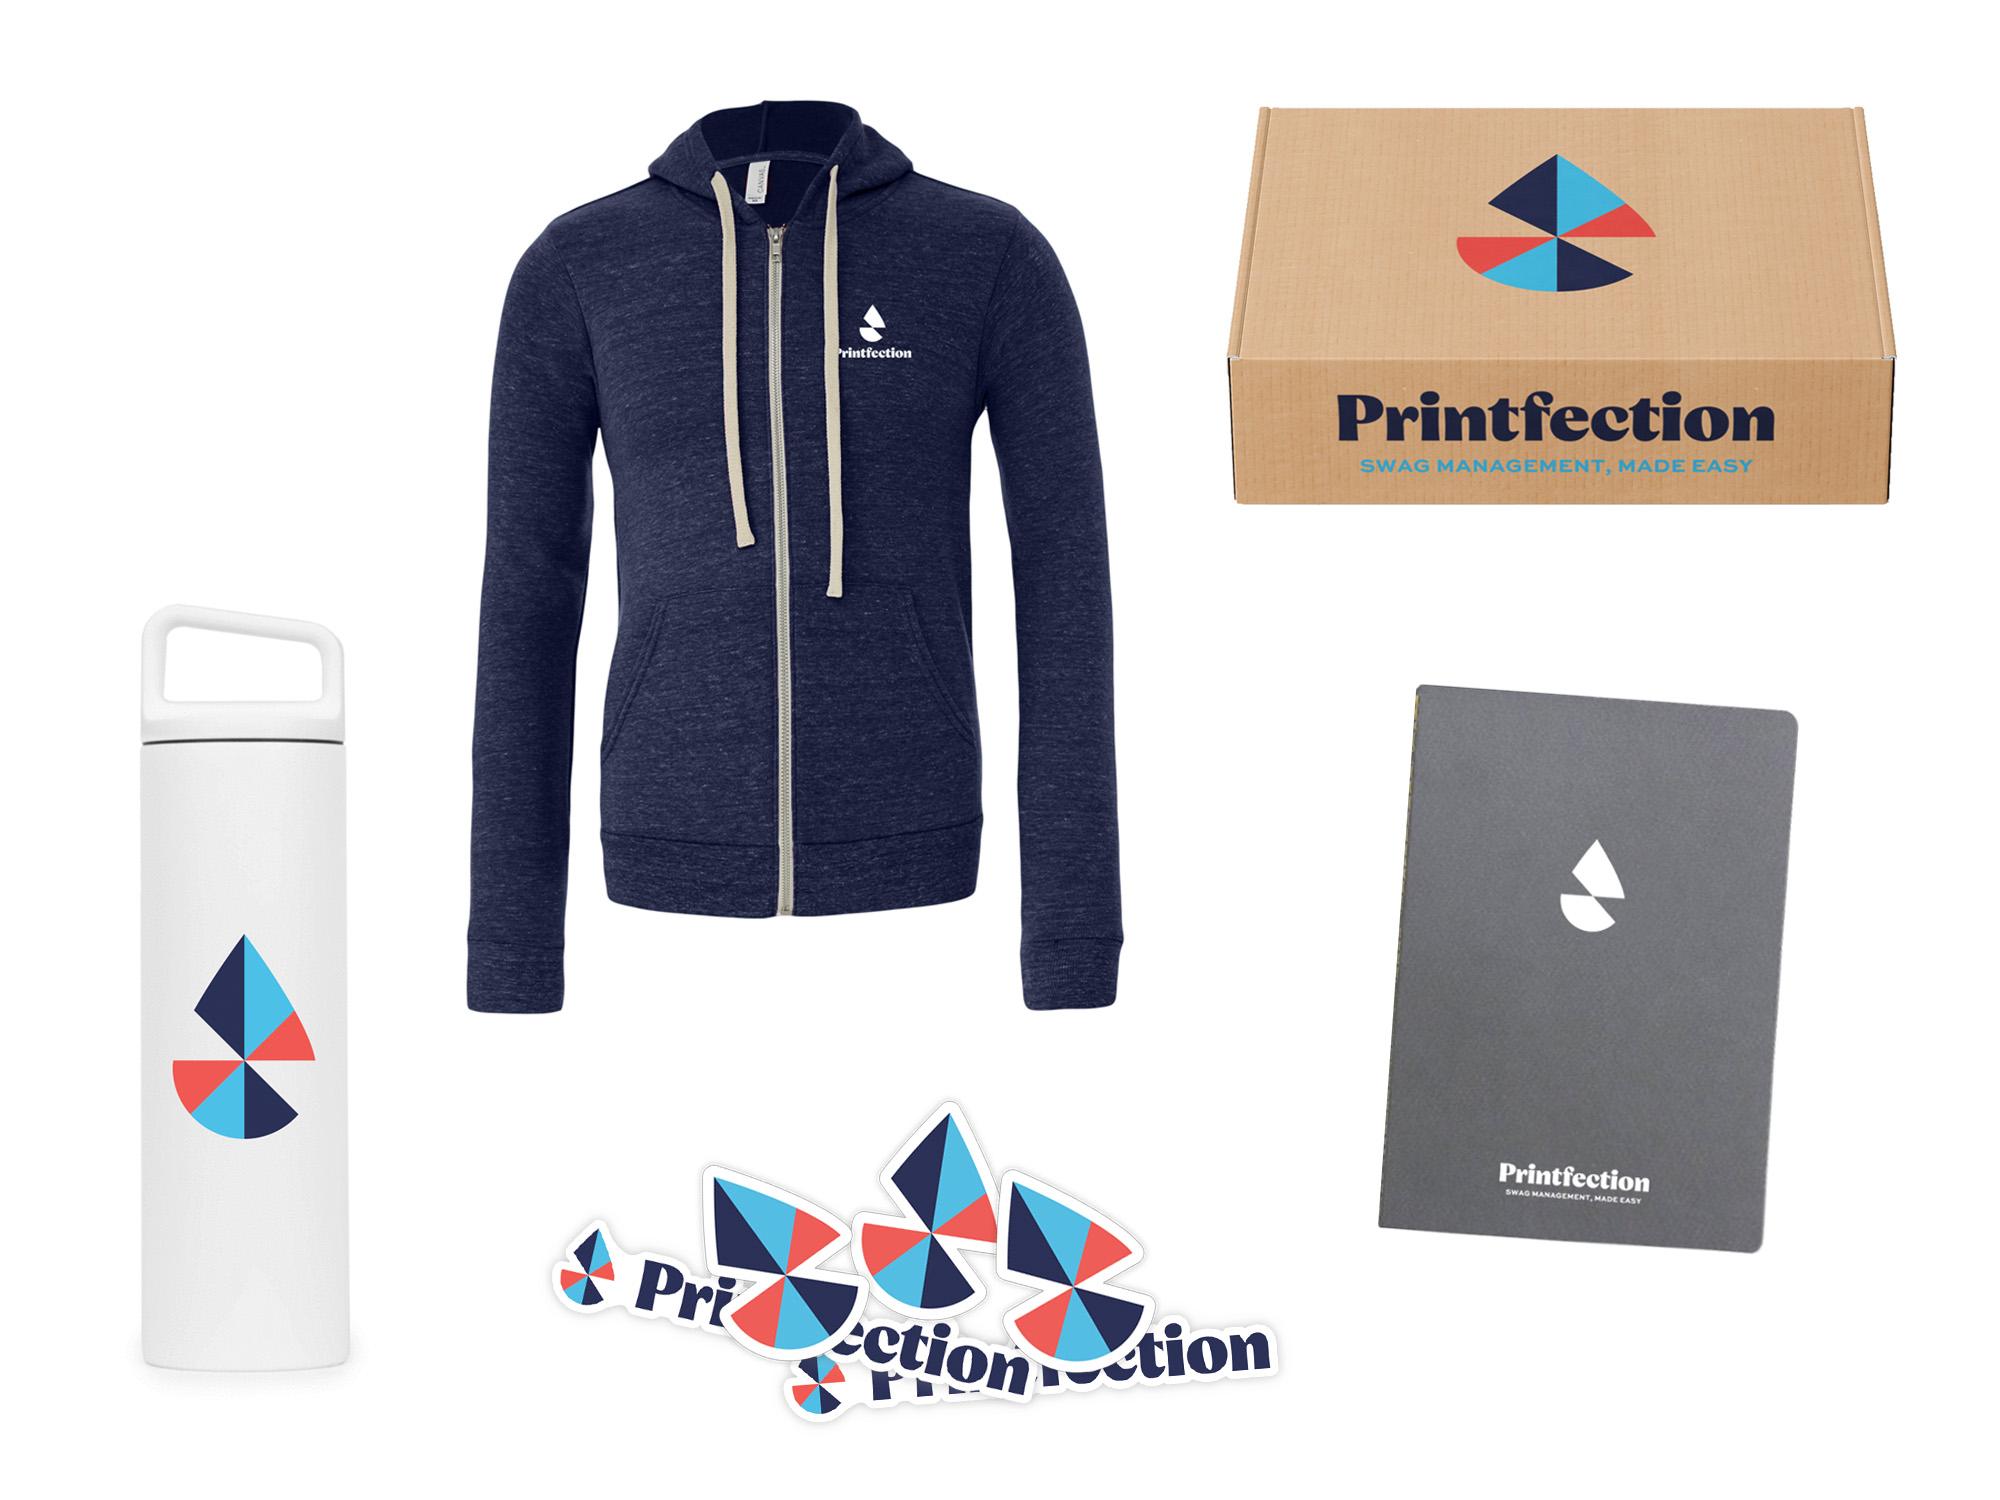 Printfection's employee welcome kit